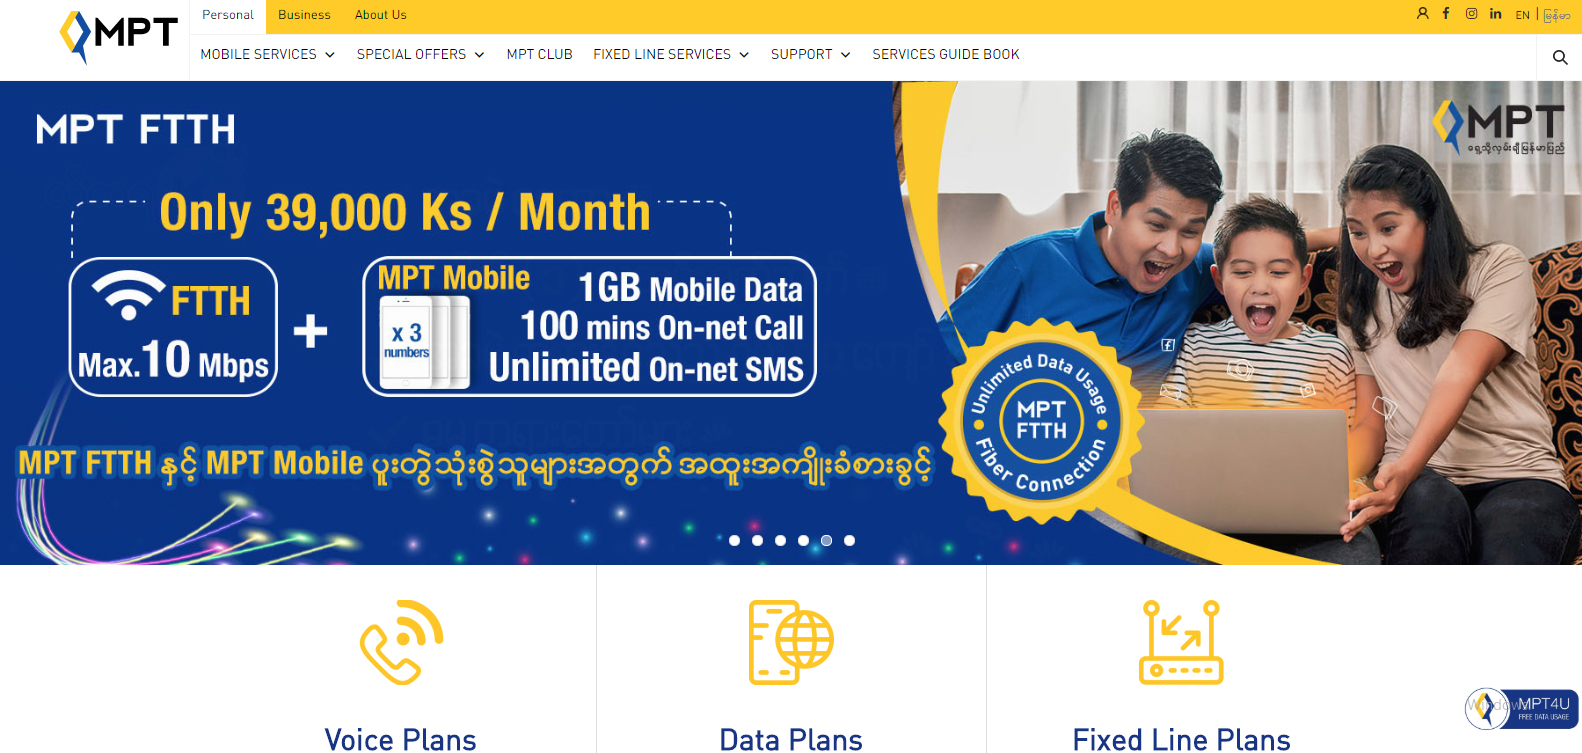 Birmania-MPT-pagina-web-oficial